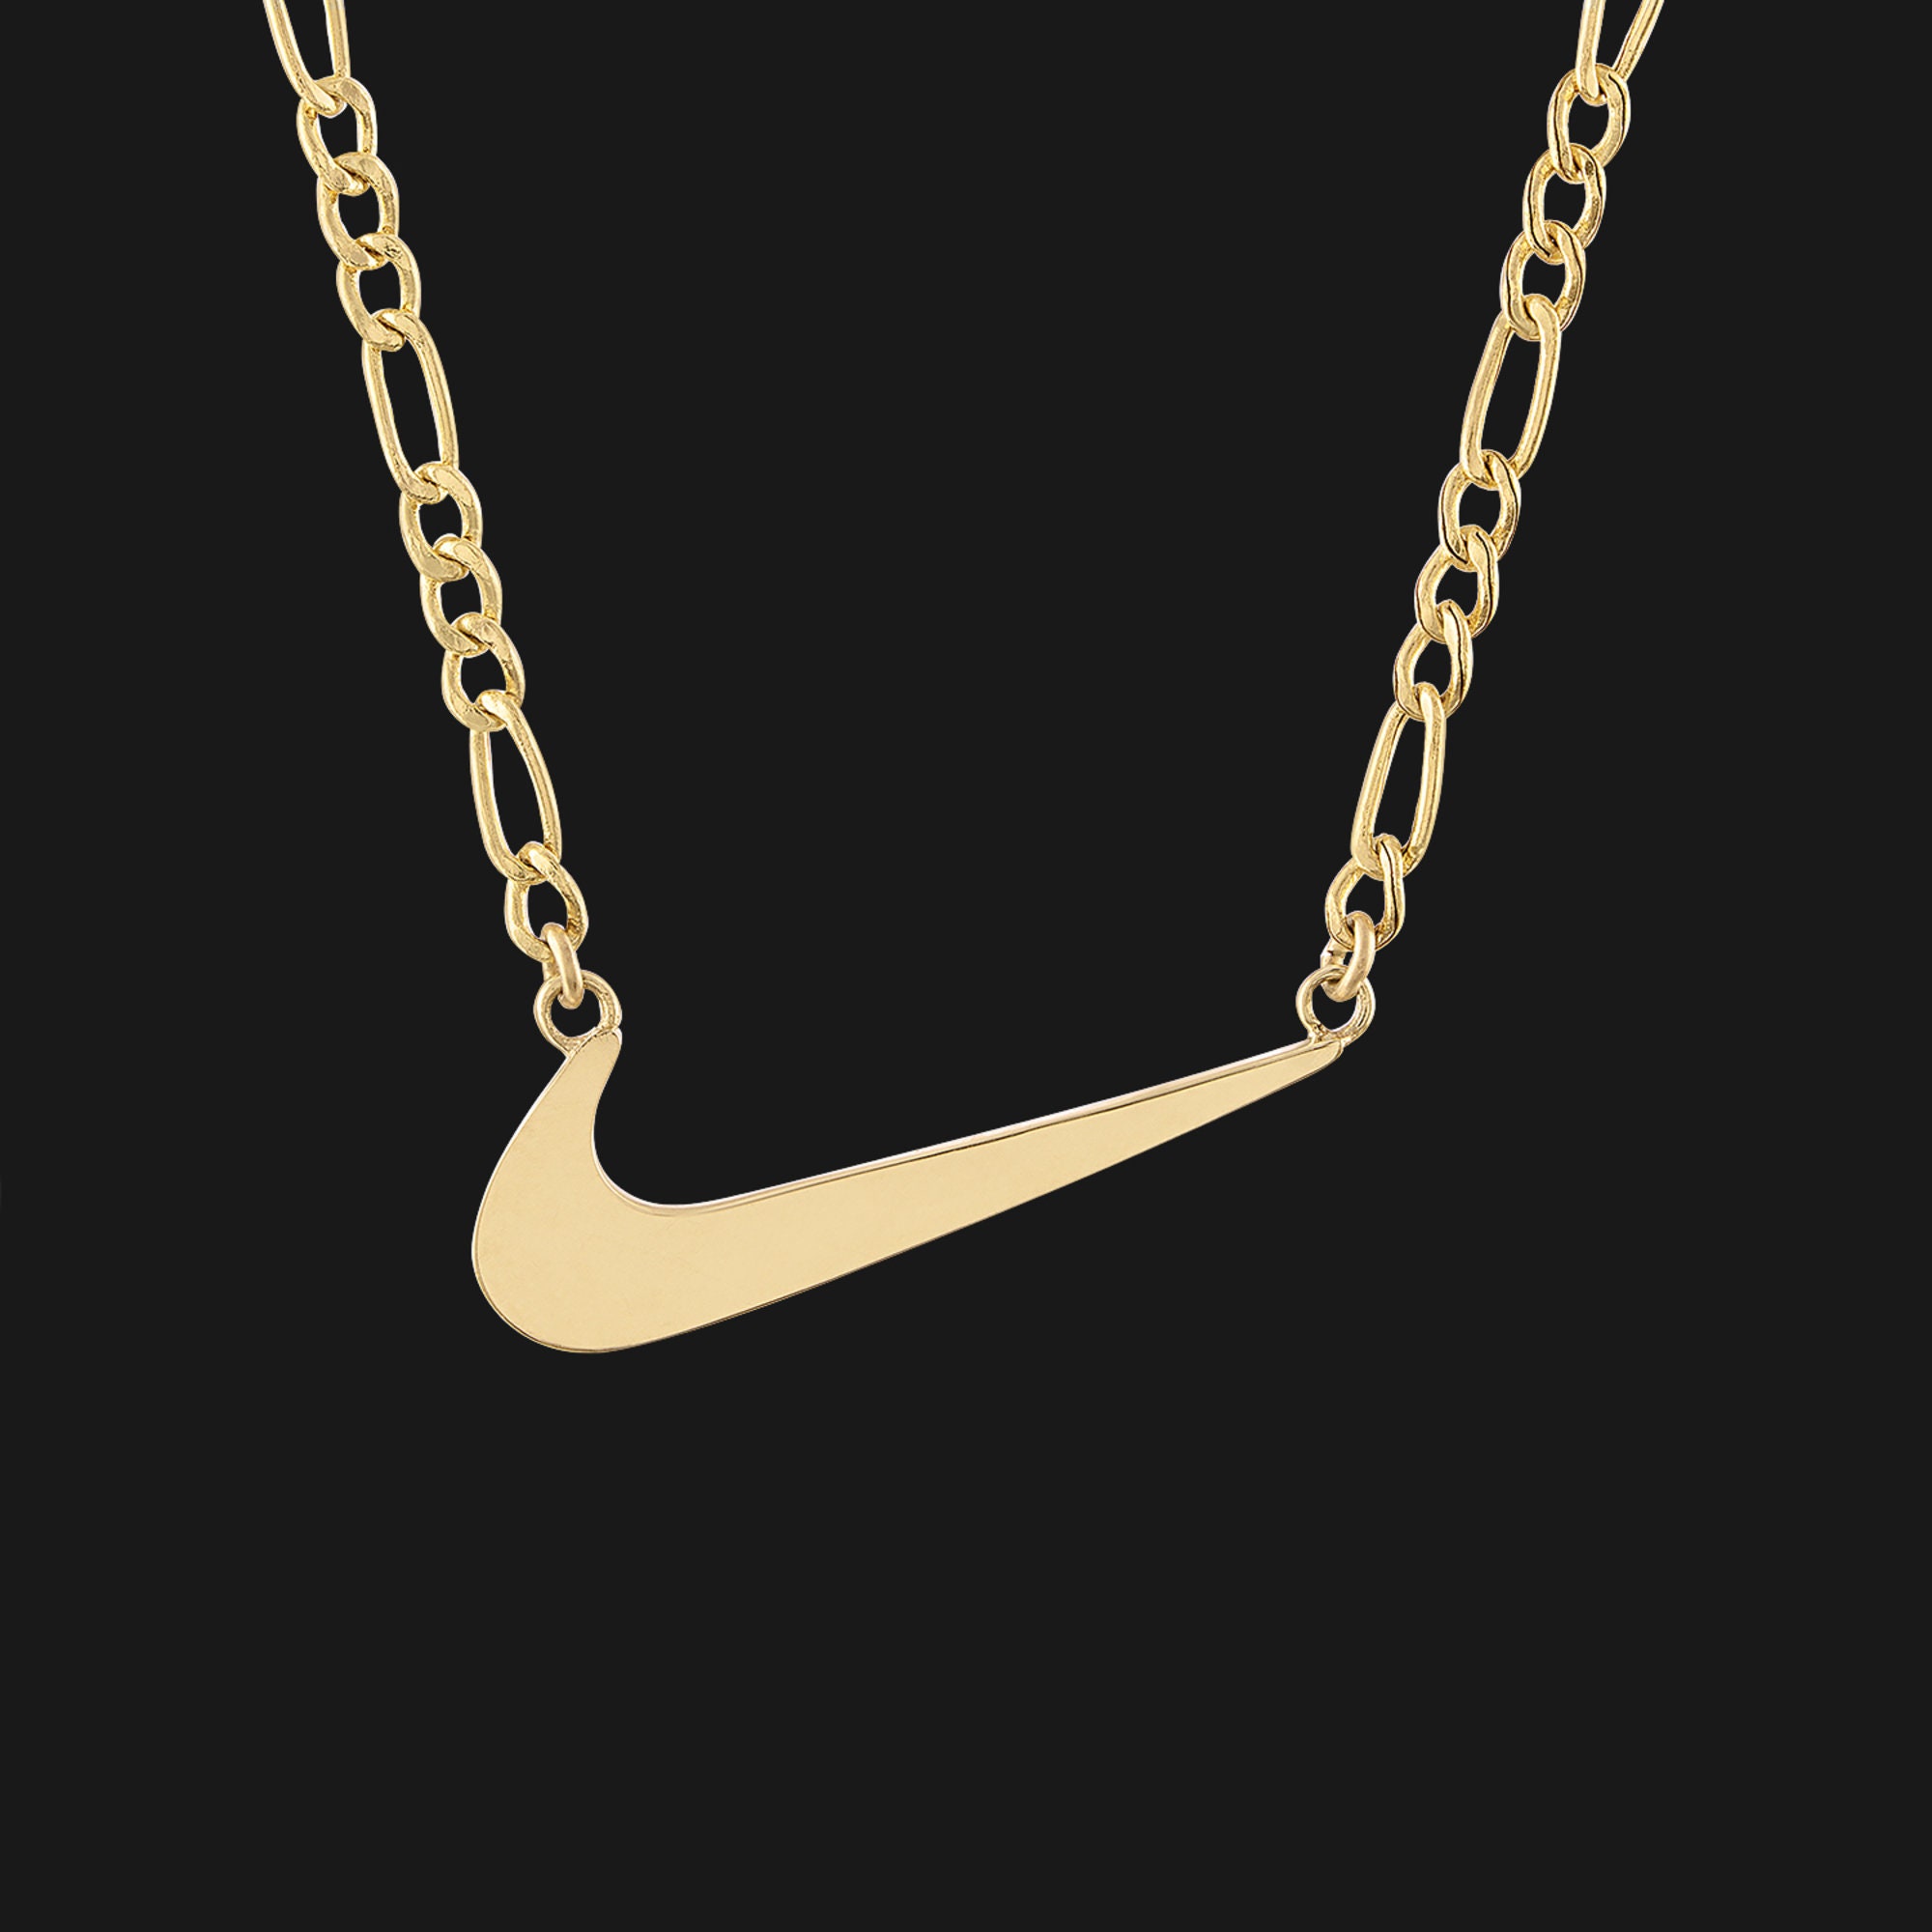 Nike Jewellery Nike 